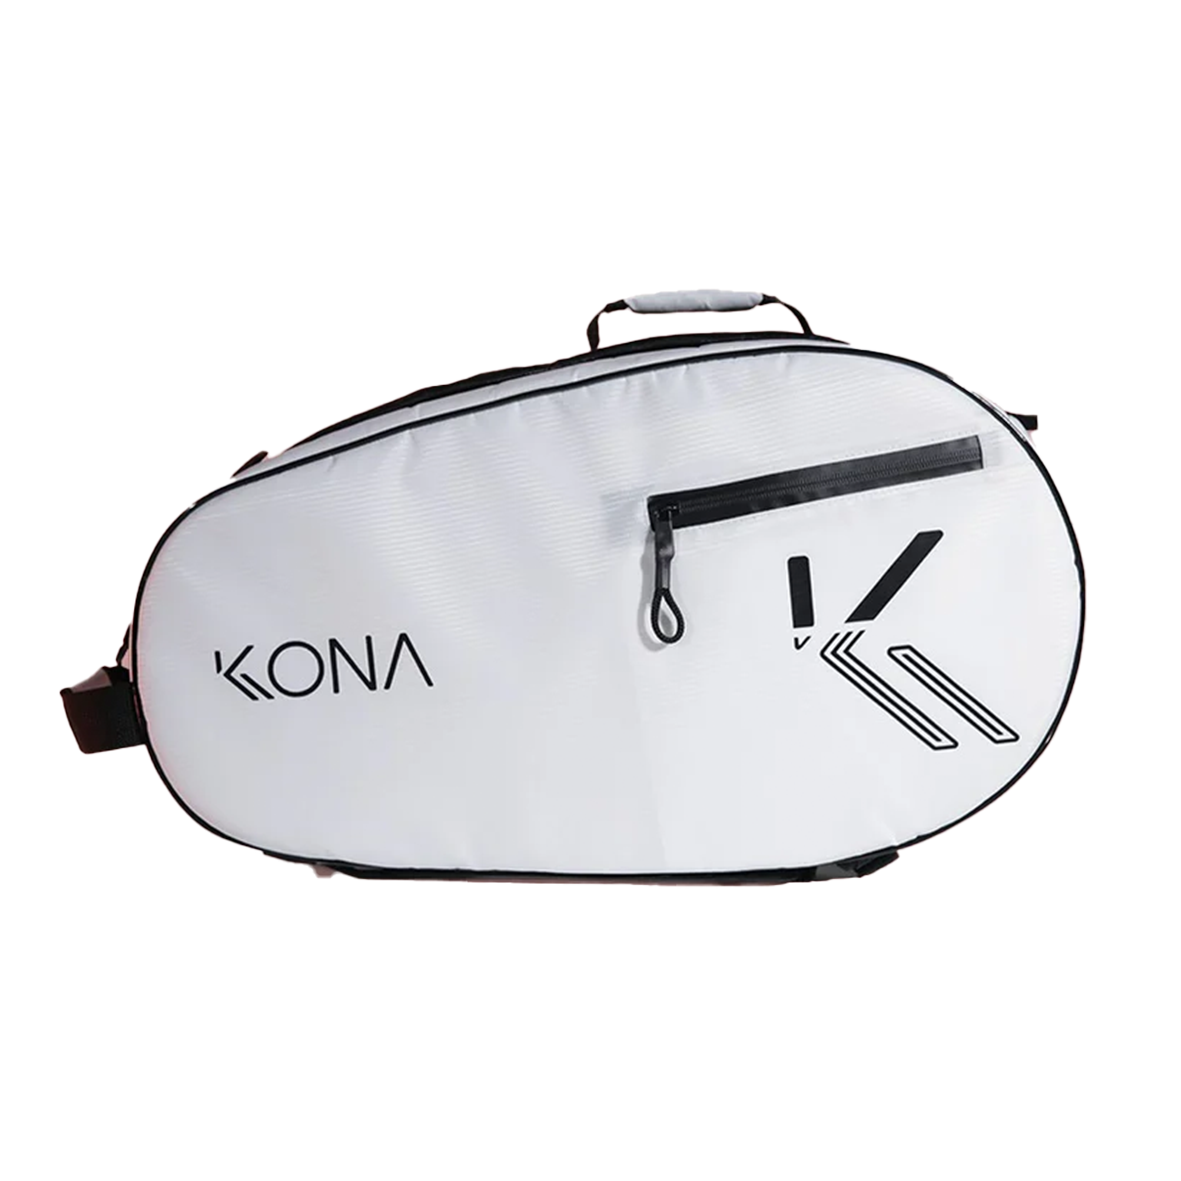 Kona BASIC PLUS White / Black Small Backpack